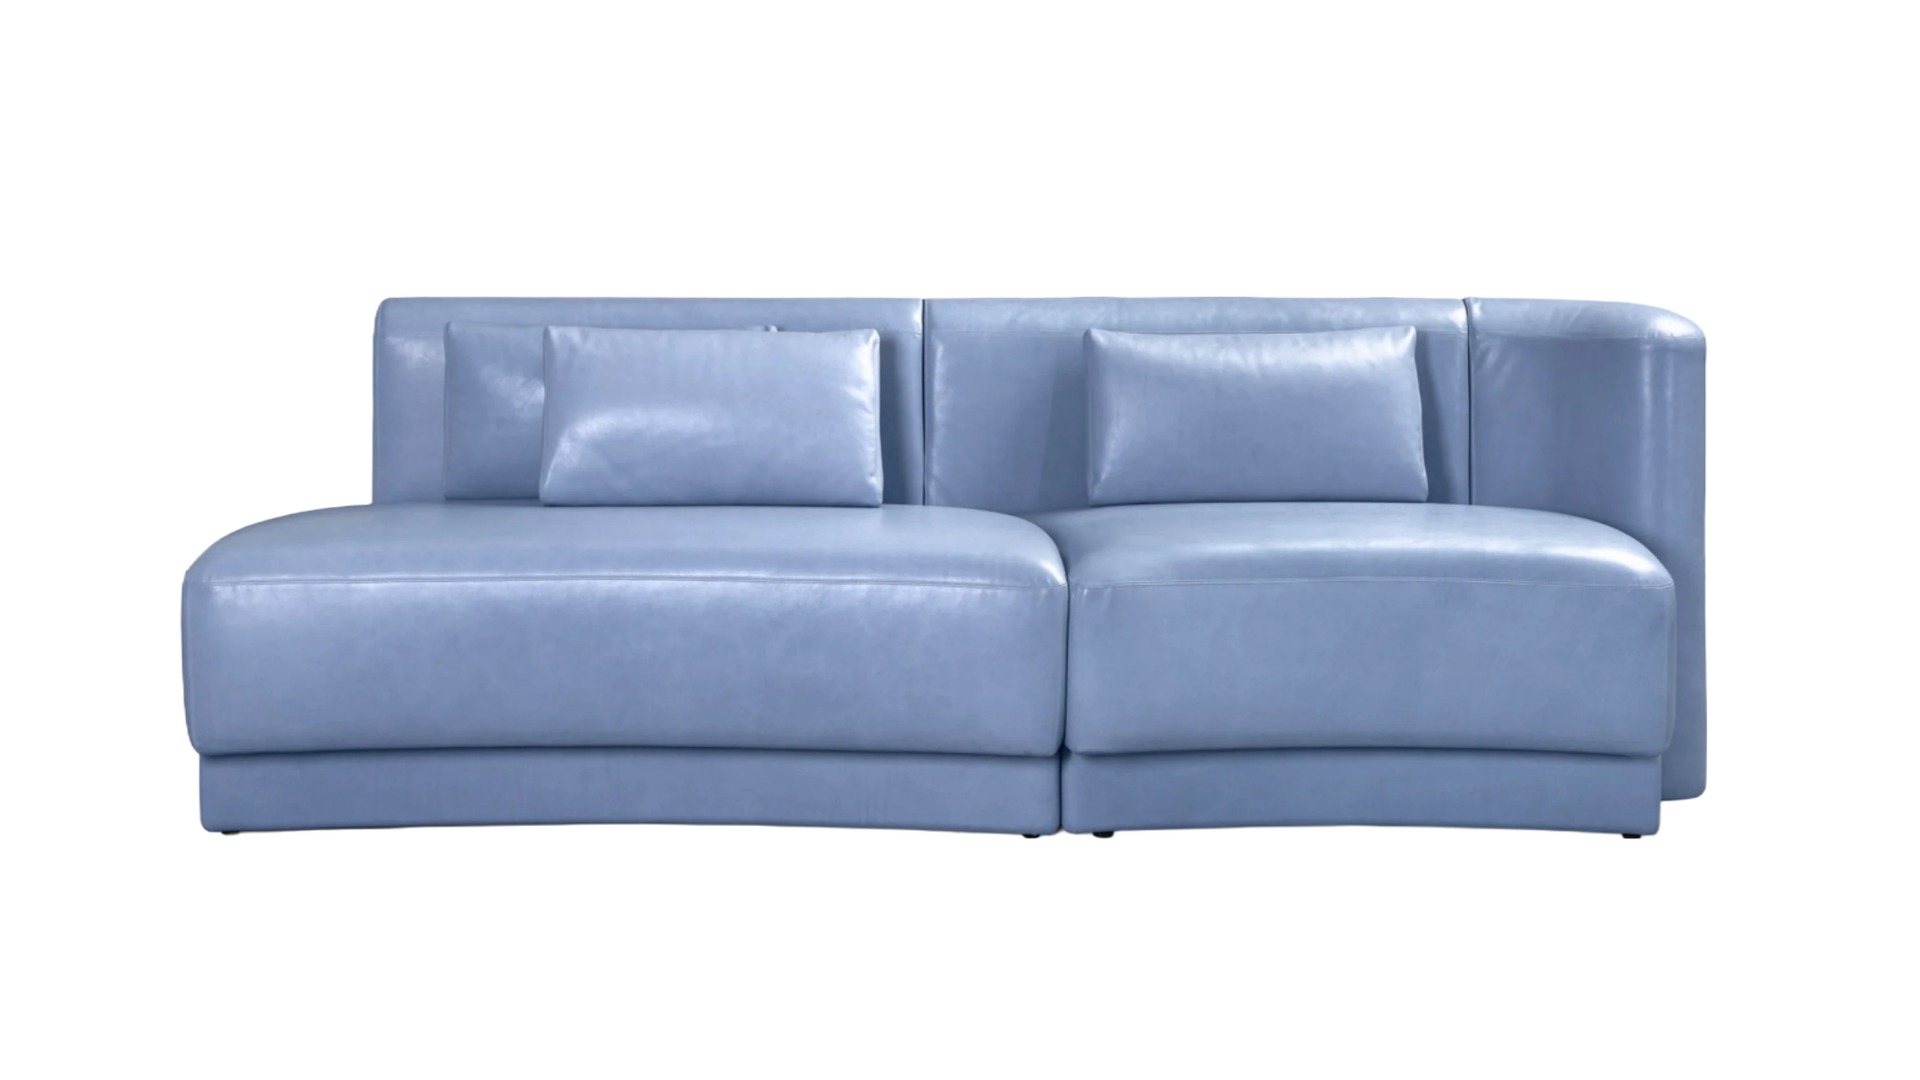 Baxter Clara modulaire bank sofa bench Hora Barneveld 14.jpg